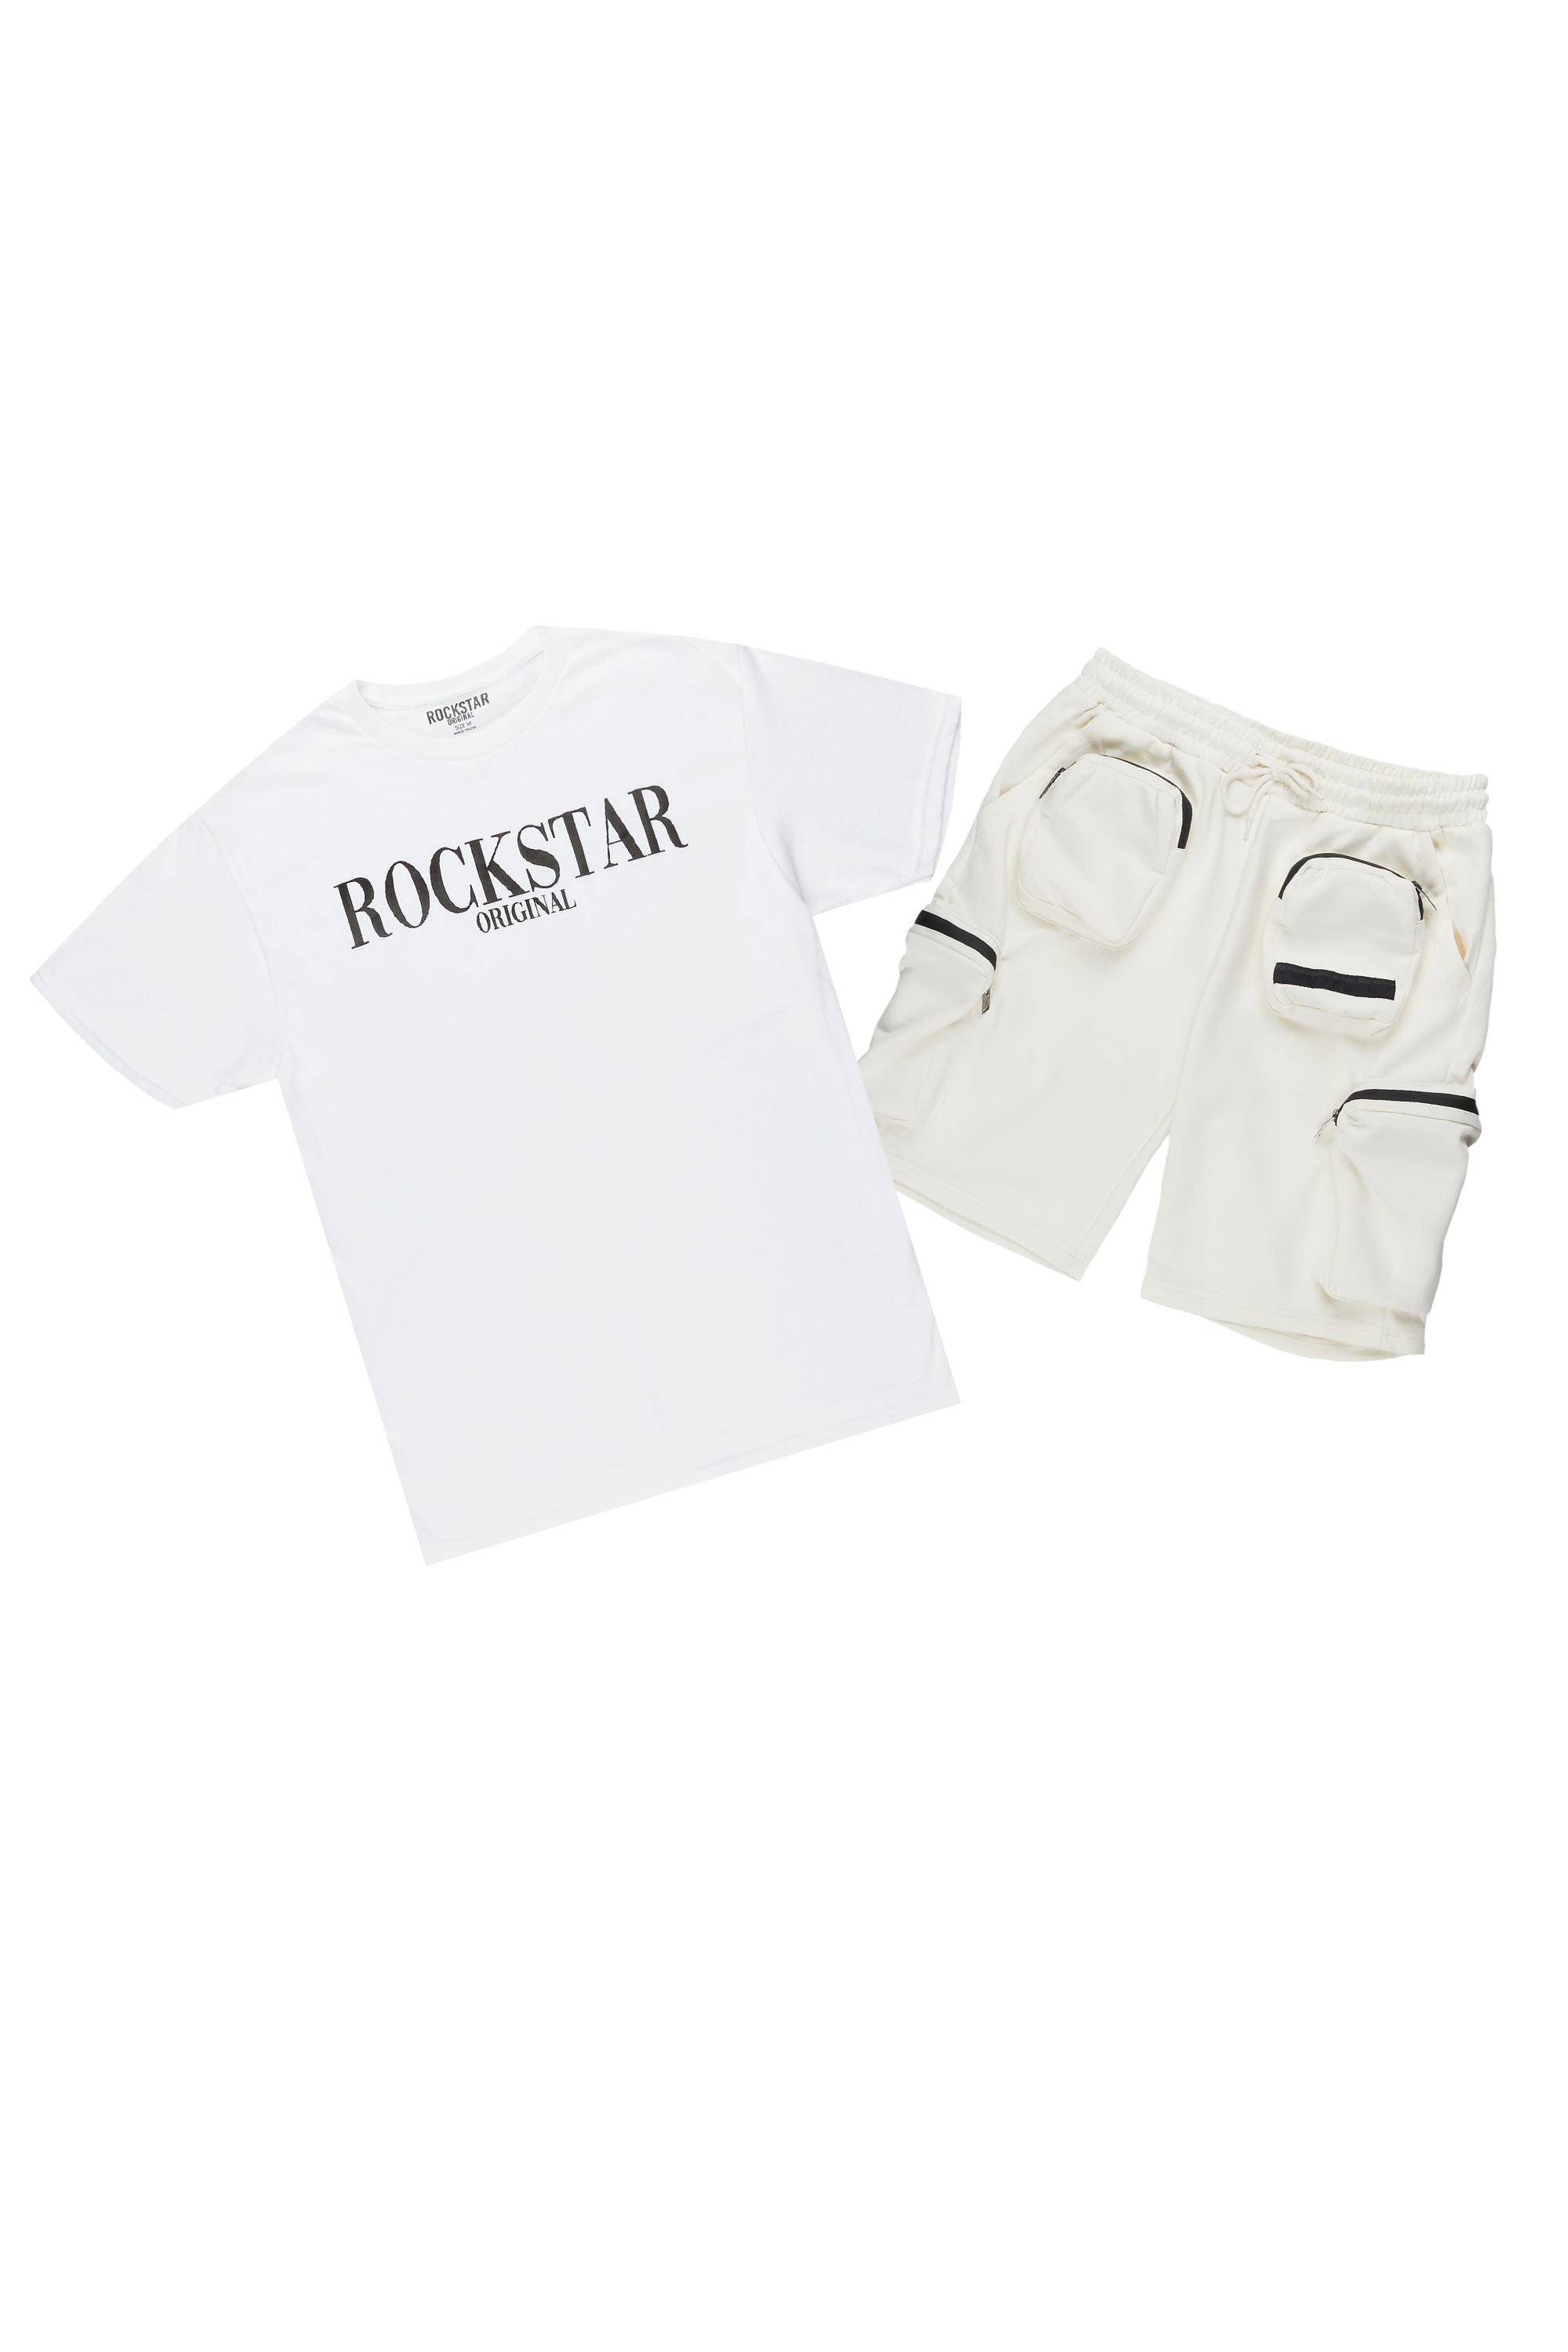 Octavio White/Cream T-Shirt Cargo Short Set